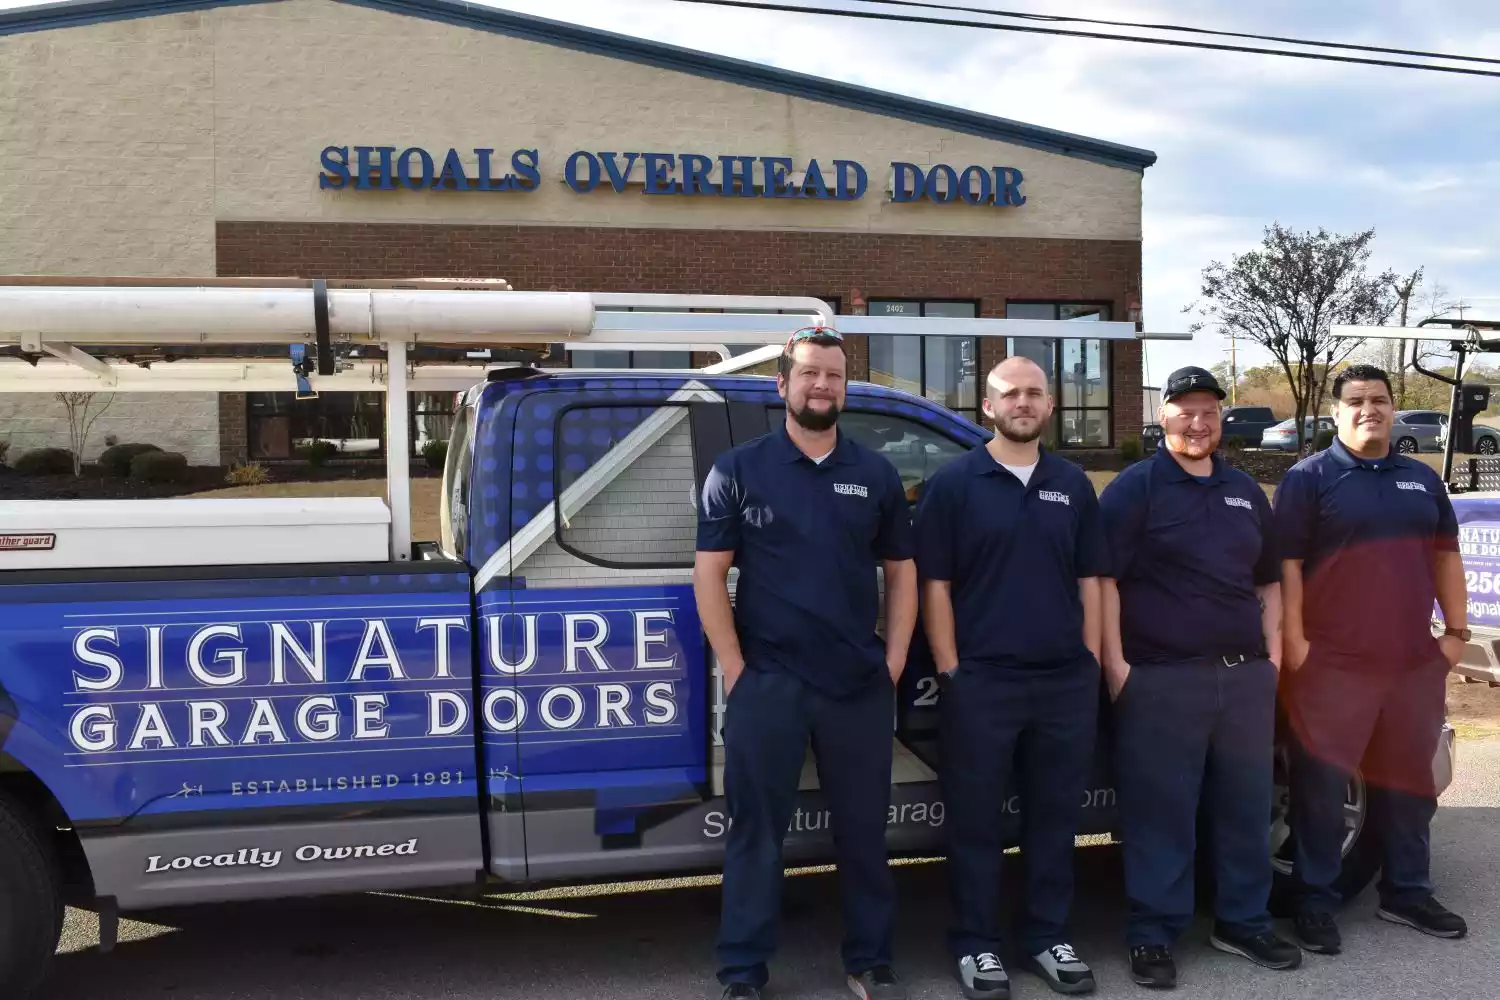 Signature Garage Doors - Team Photo with Truck